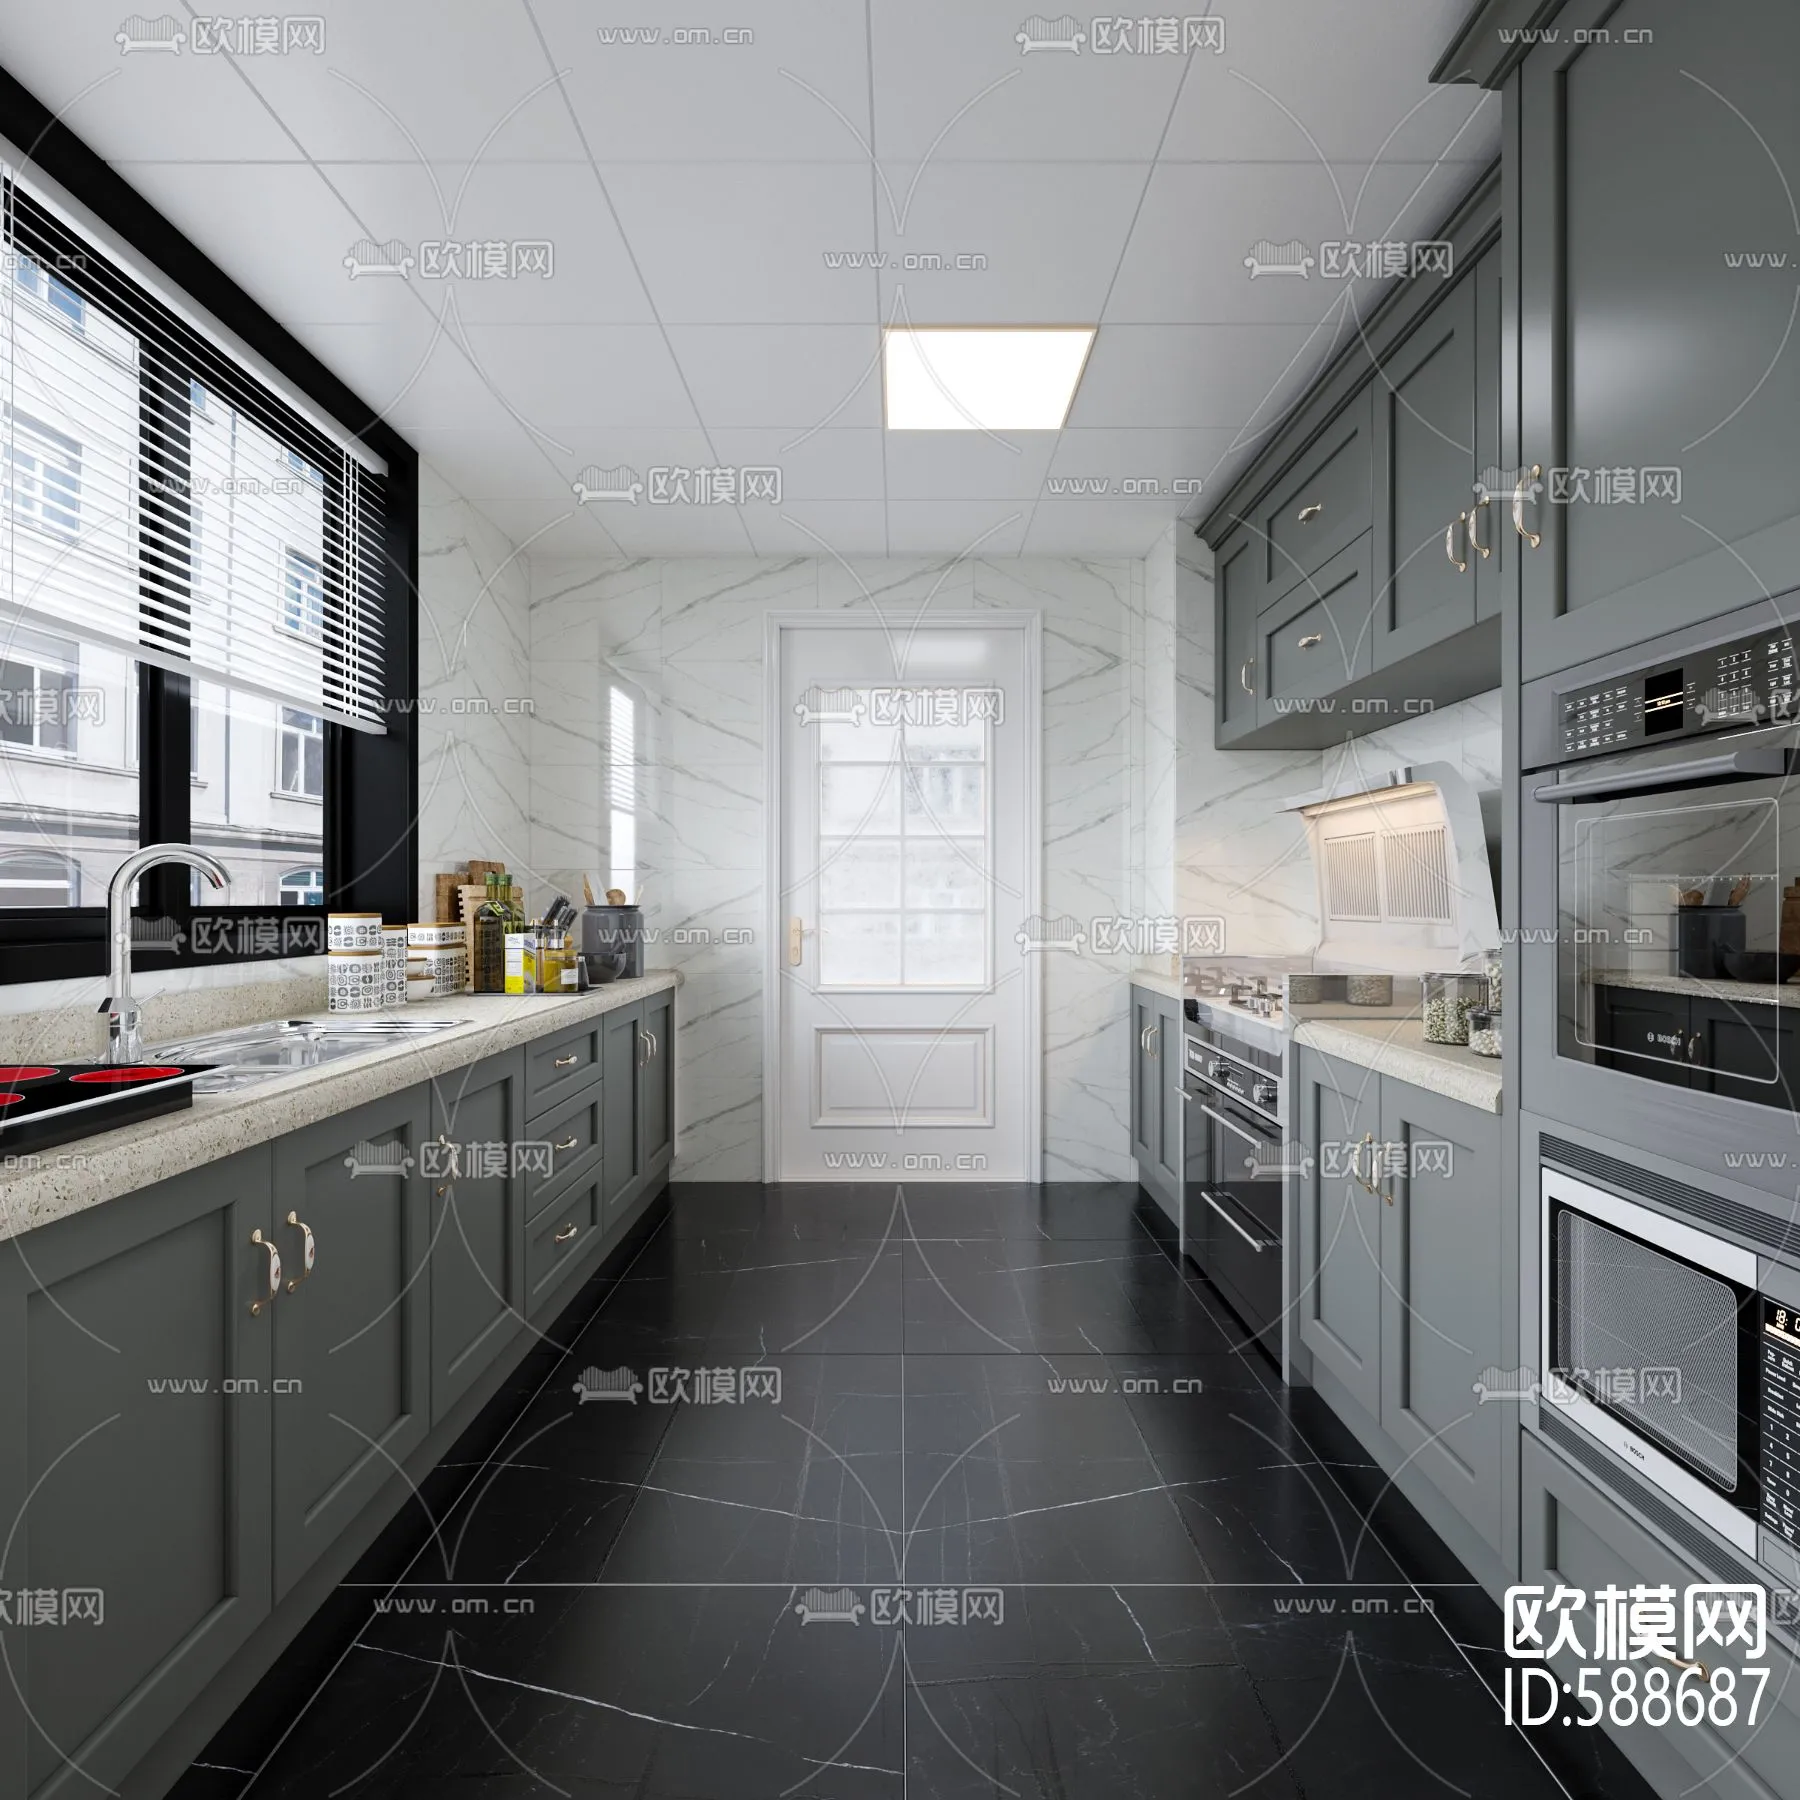 Kitchen 3D Scenes – 0568